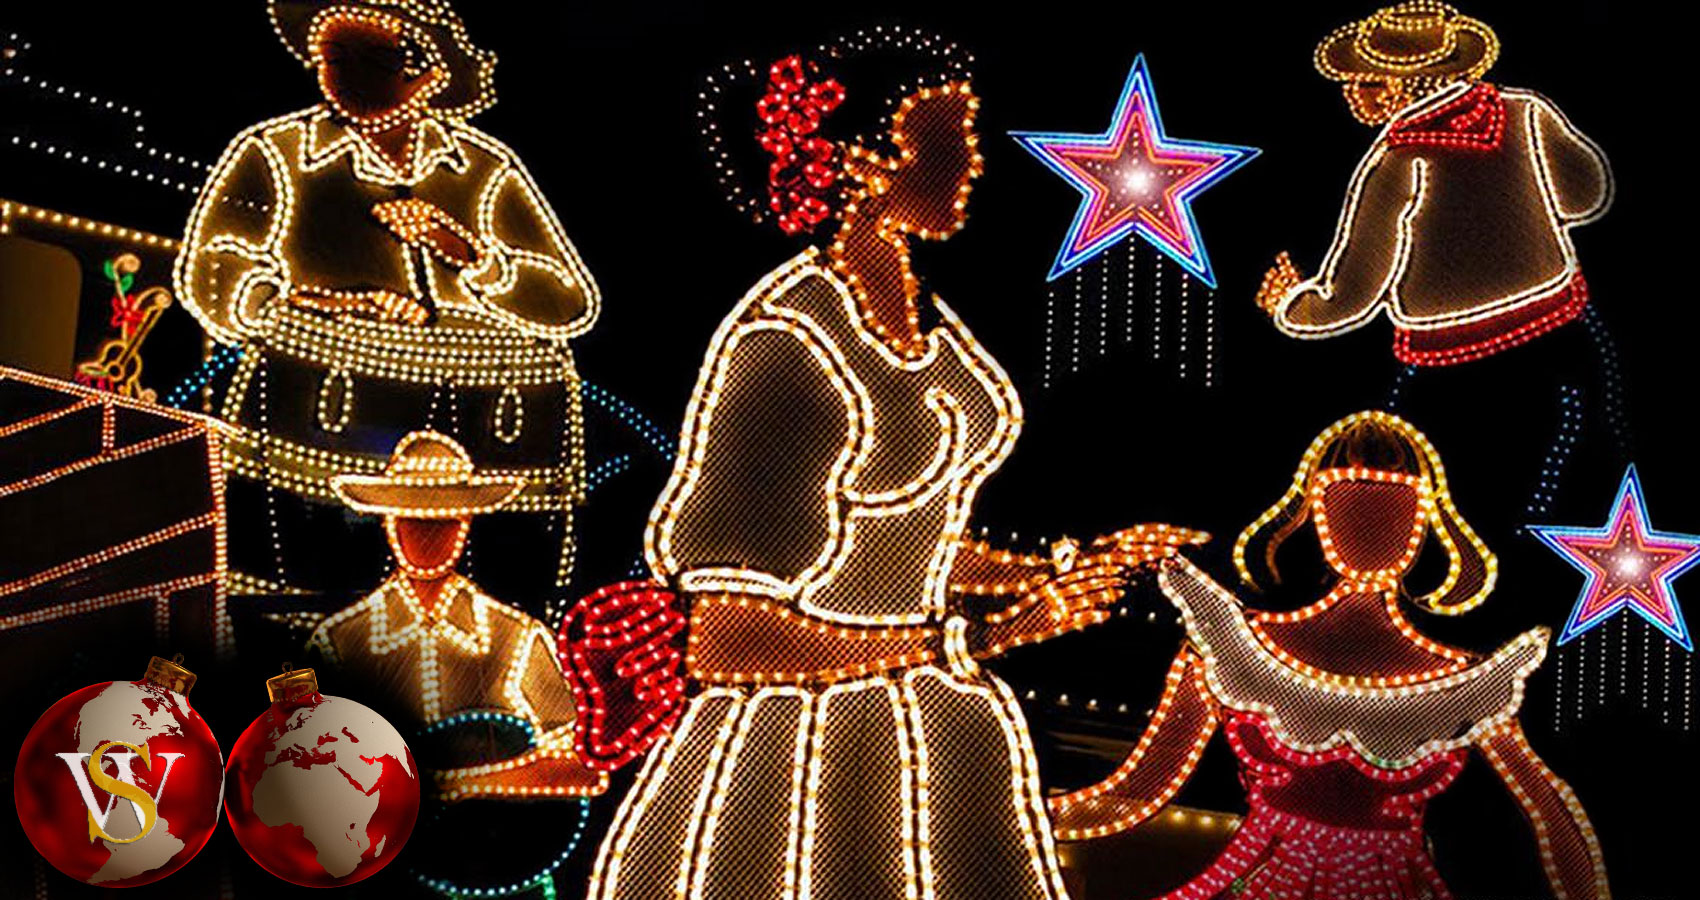 Navidad en Puerto RIco written by Natalia Aeschliman at Spillwords.com